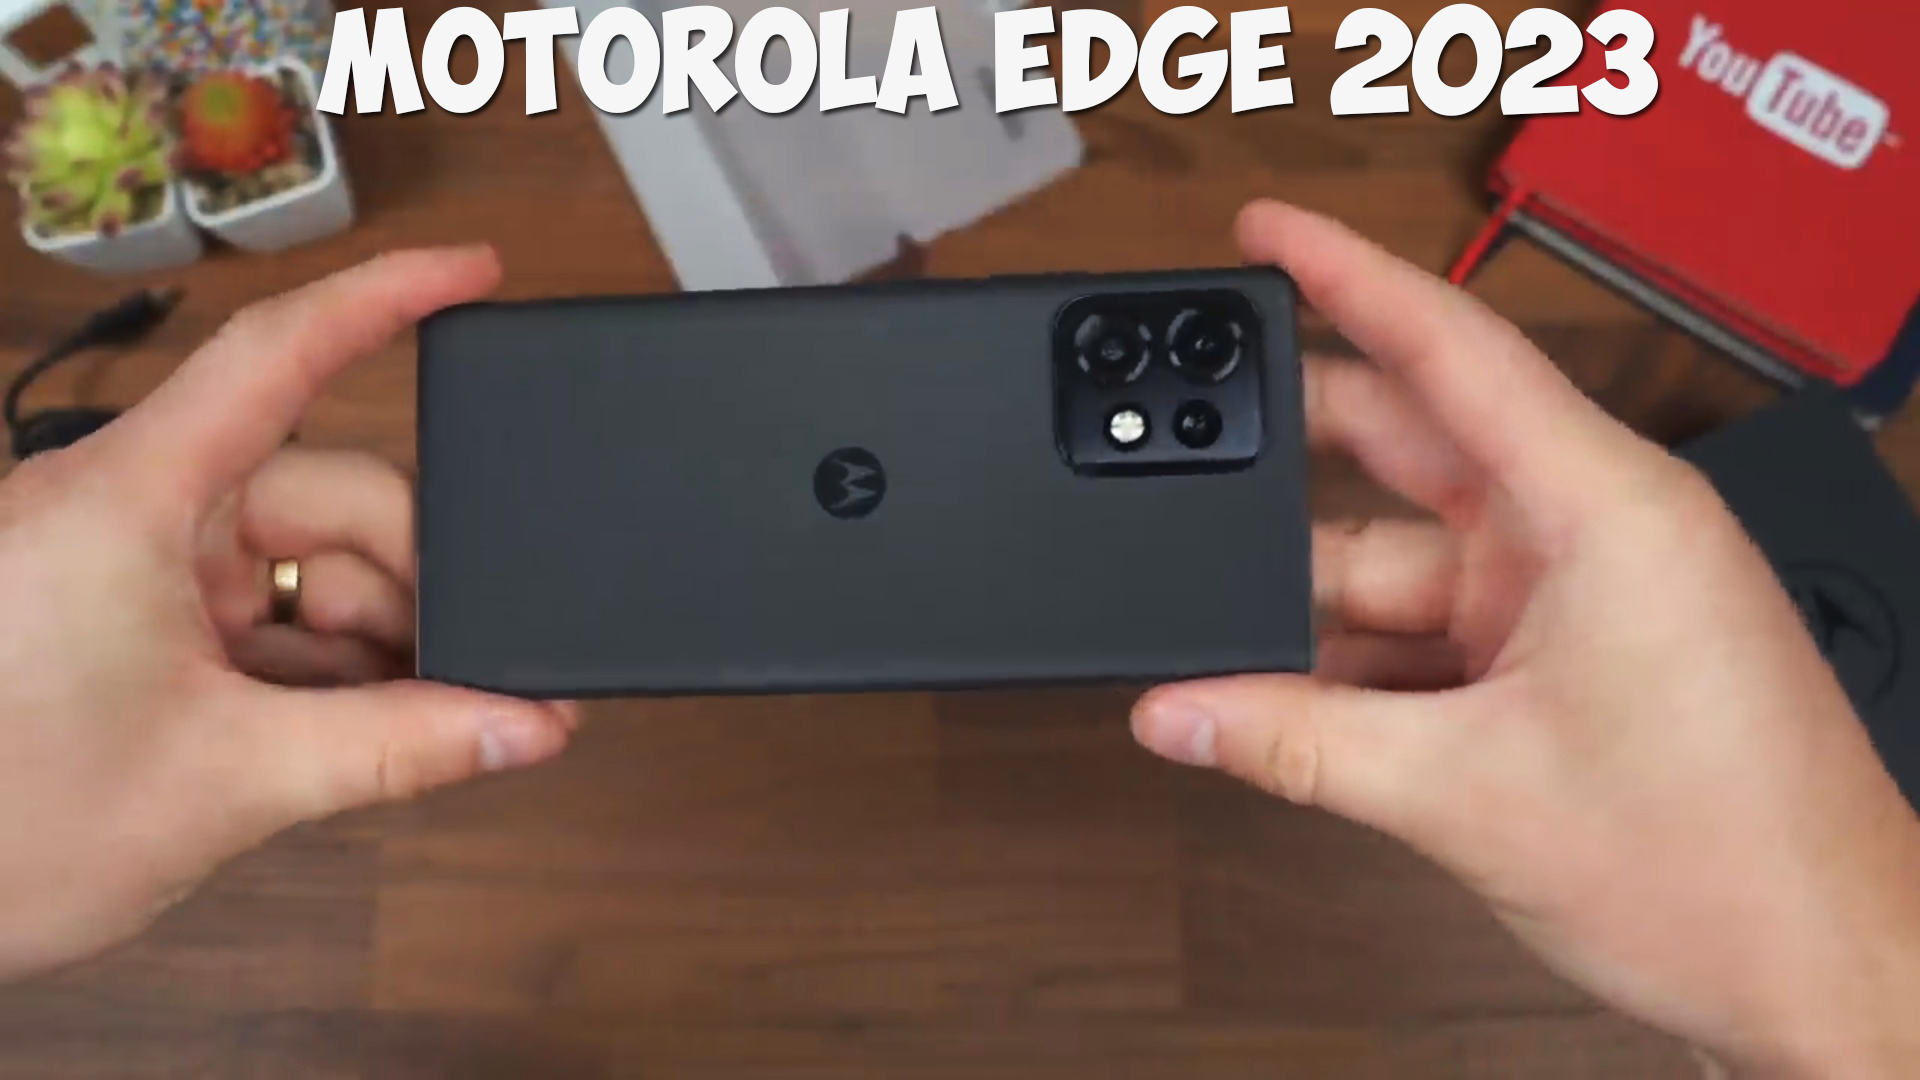 Motorola edge 2023